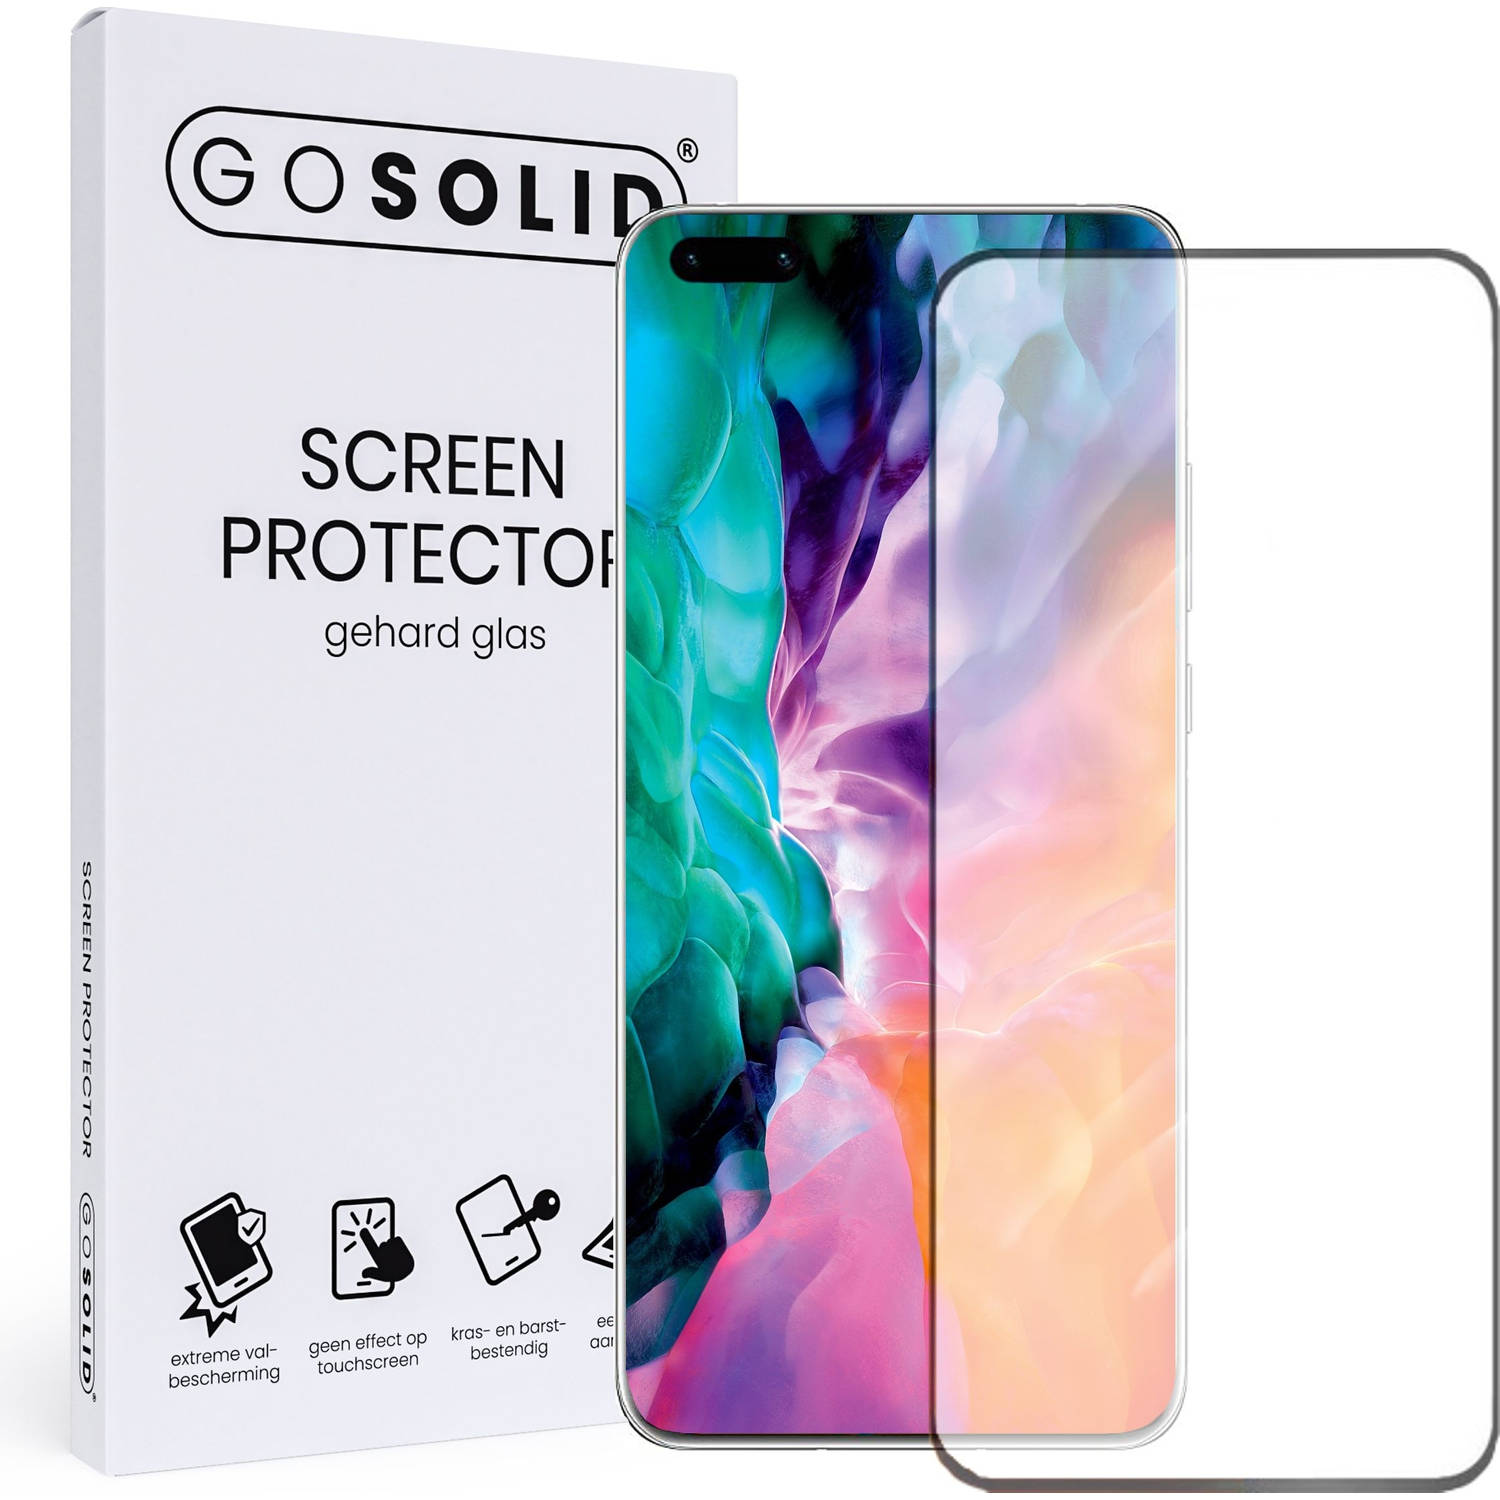 GO SOLID! Screenprotector voor Huawei Mate 40 Pro+ gehard glas